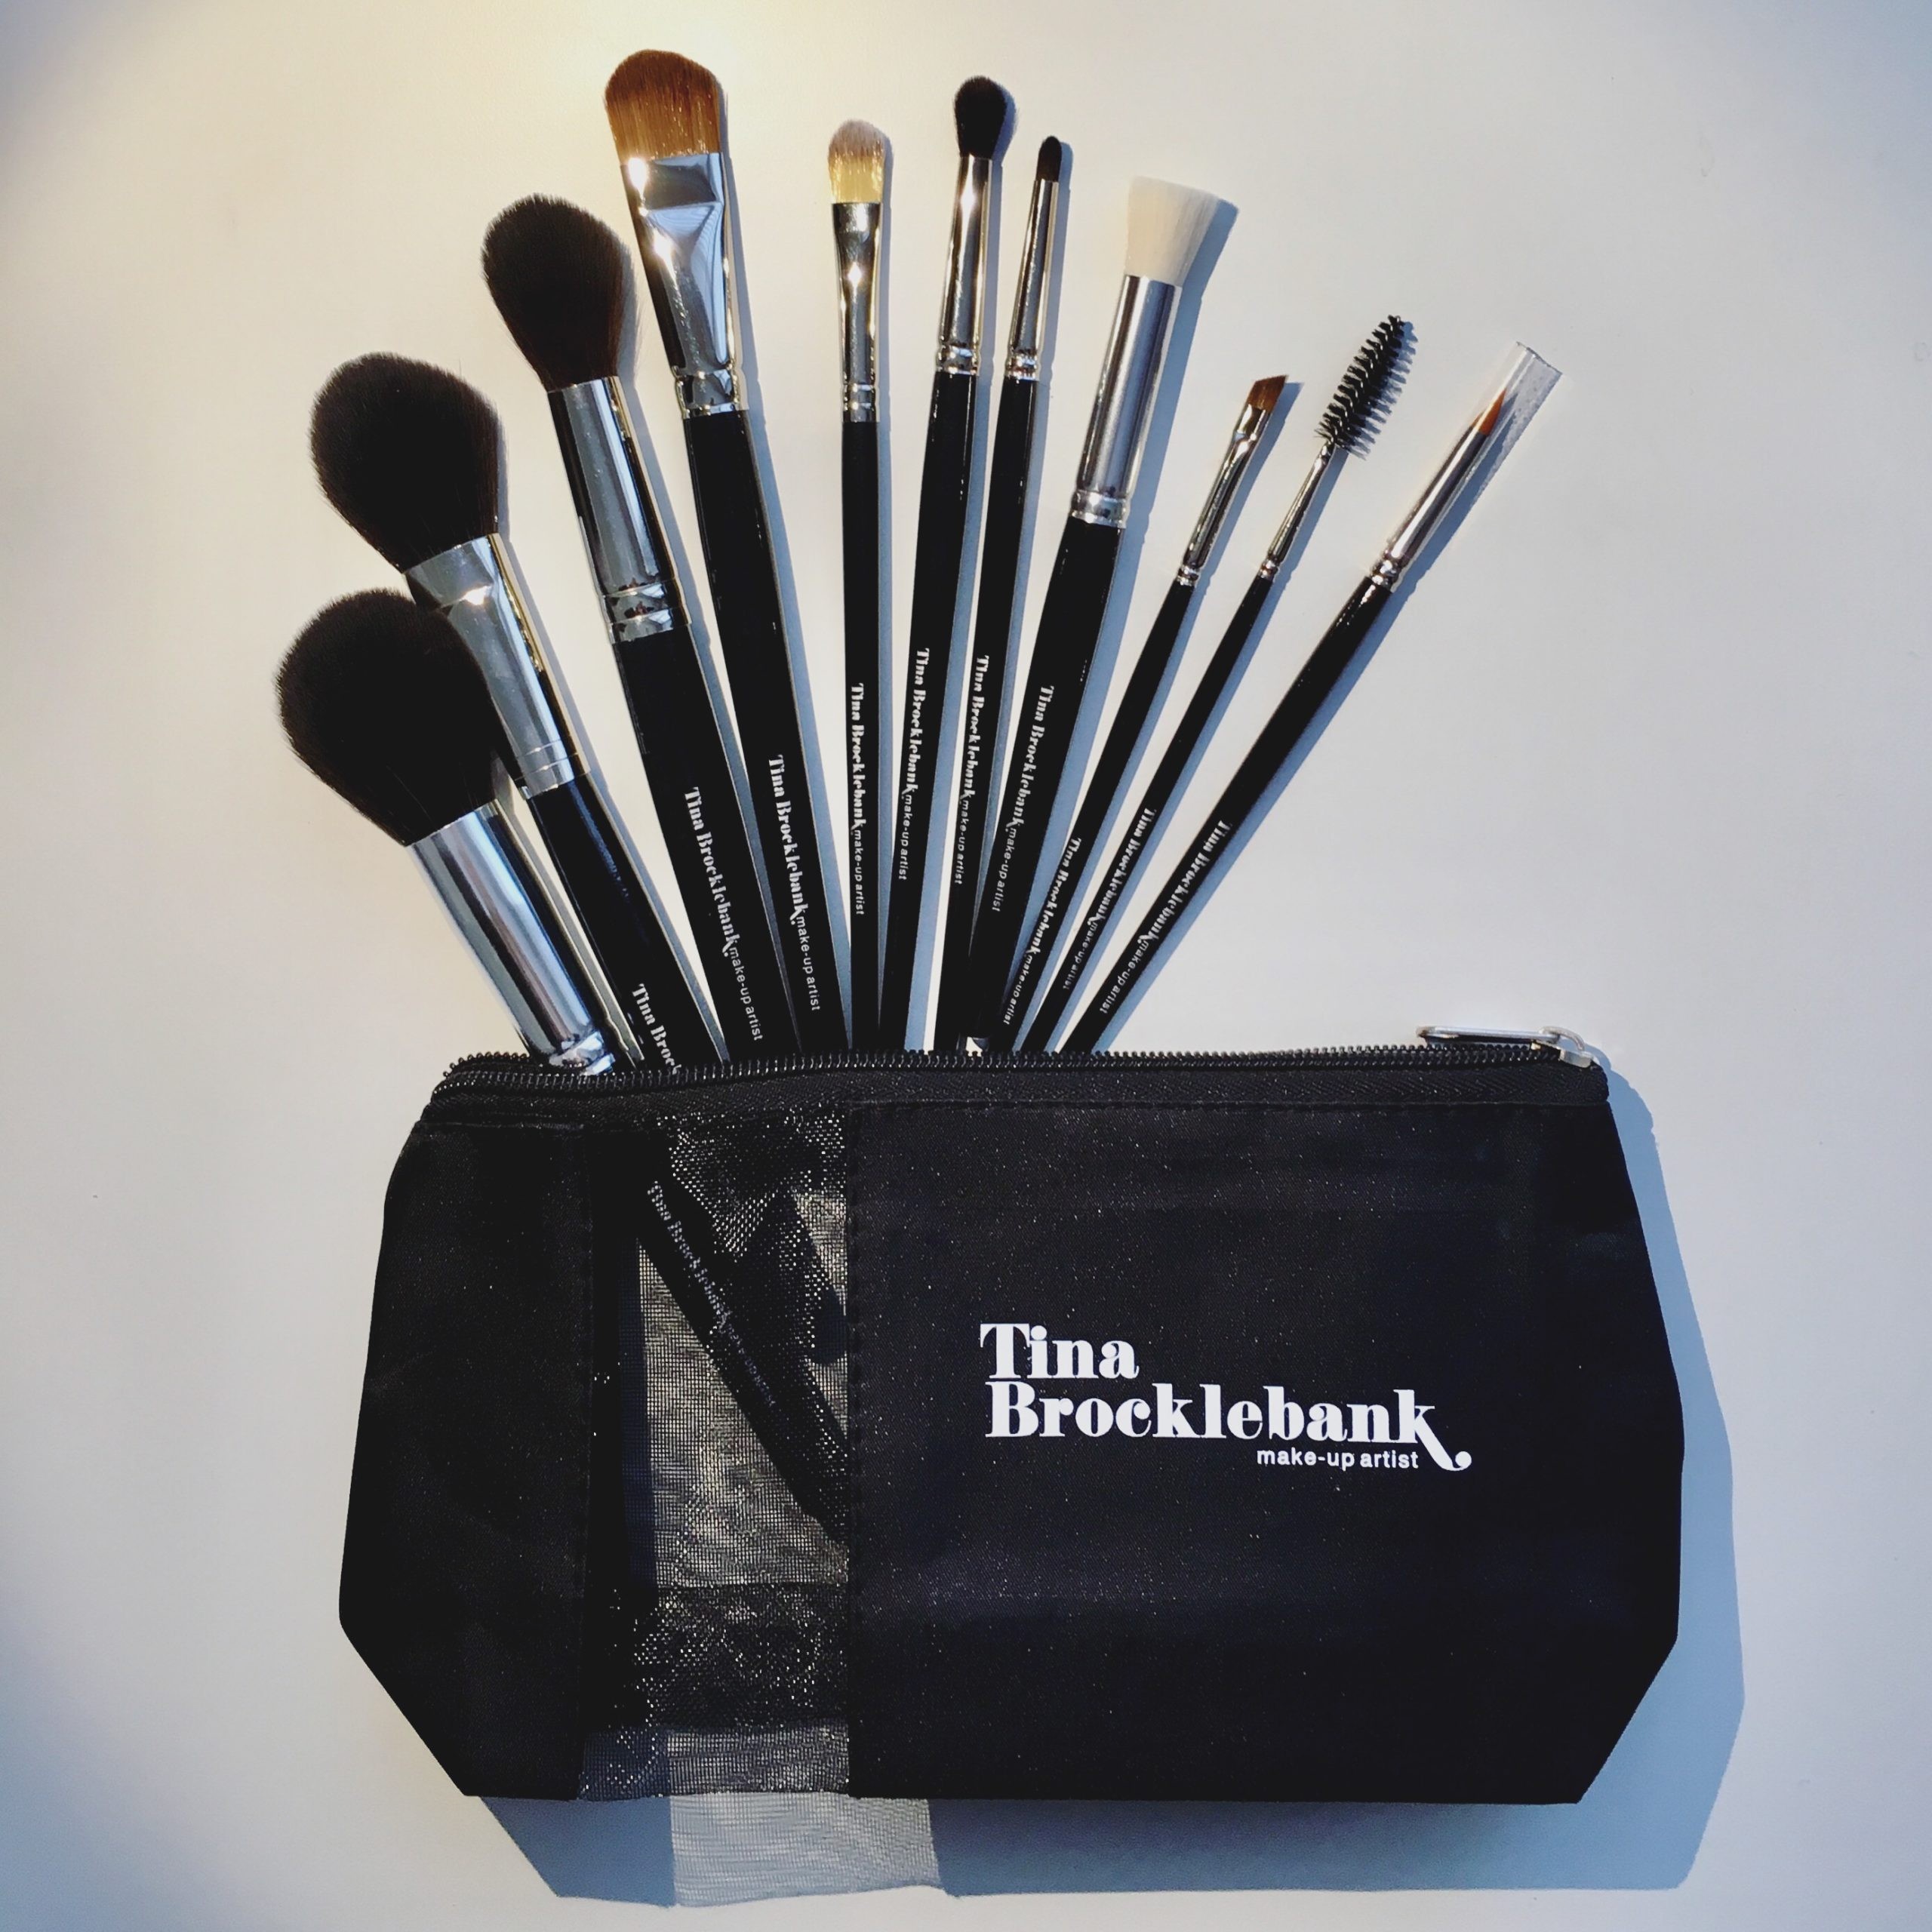 Tina Brocklebank Make-up artist brushes and bag.